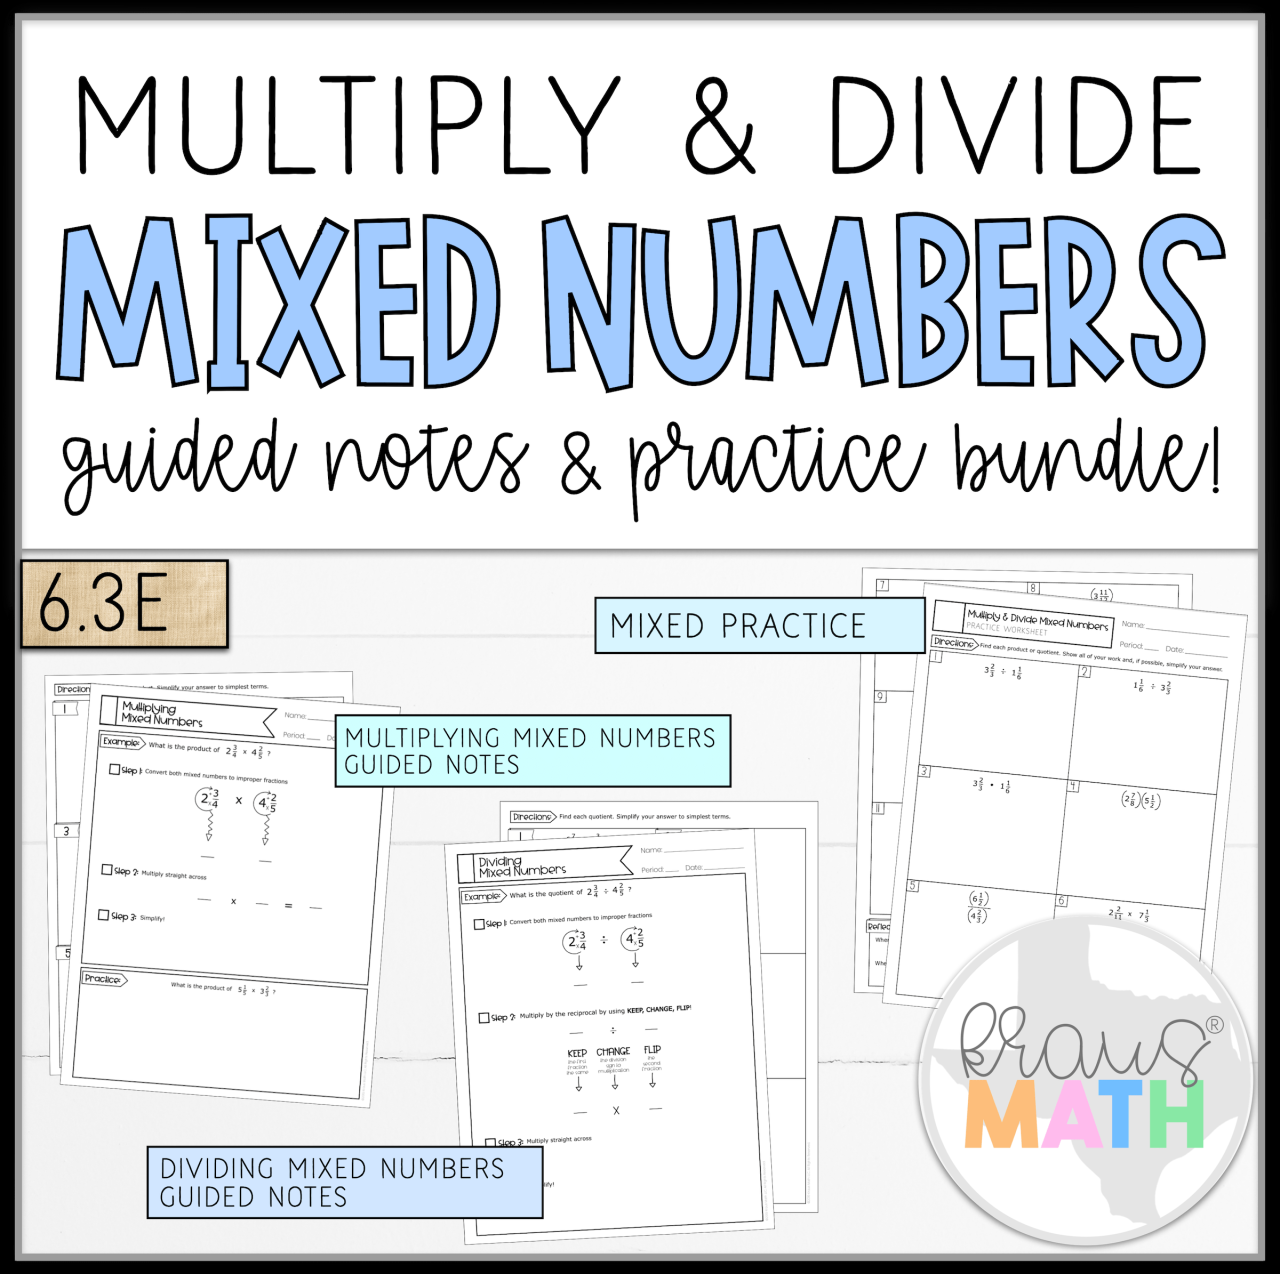 Multiply & Divide Mixed Numbers Notes & Worksheet TEKS 6.3E Kraus Math